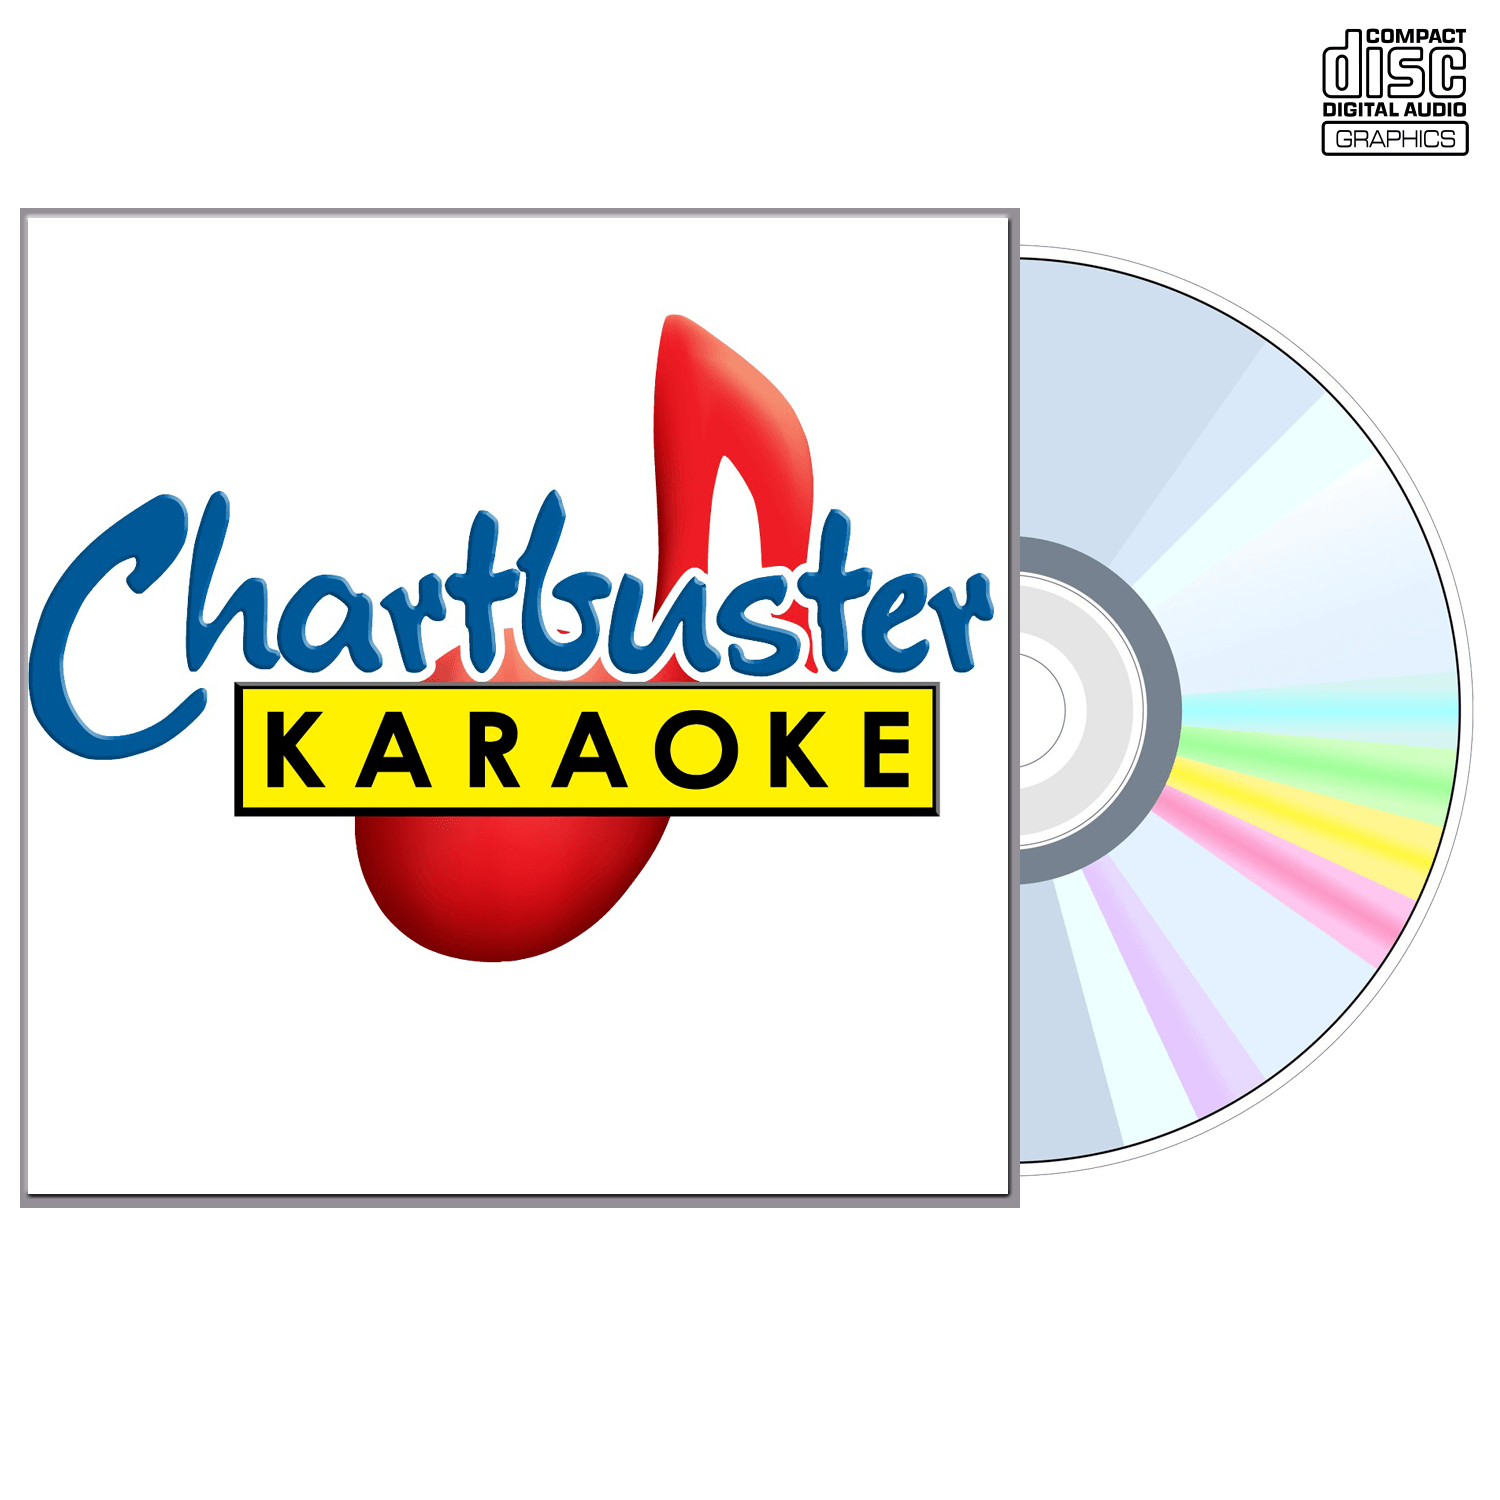 Country Collection Vol 3 - CD+G - Chartbuster Karaoke - Karaoke Home Entertainment